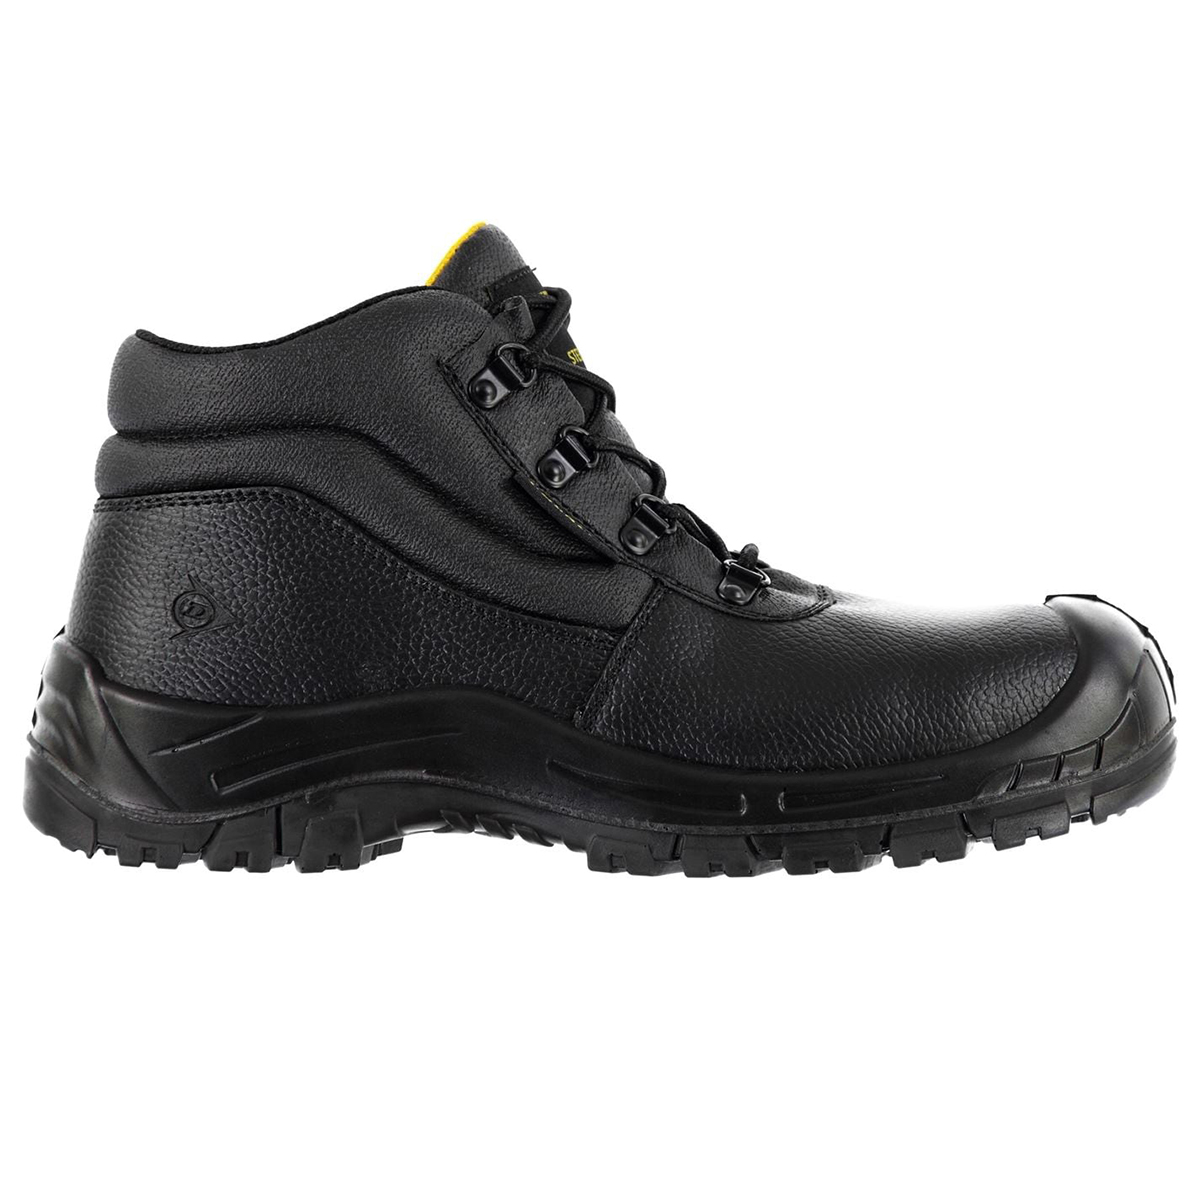 Dunlop Men's North Carolina Mid Steel Toe Work Boots - Various Patterns, 11